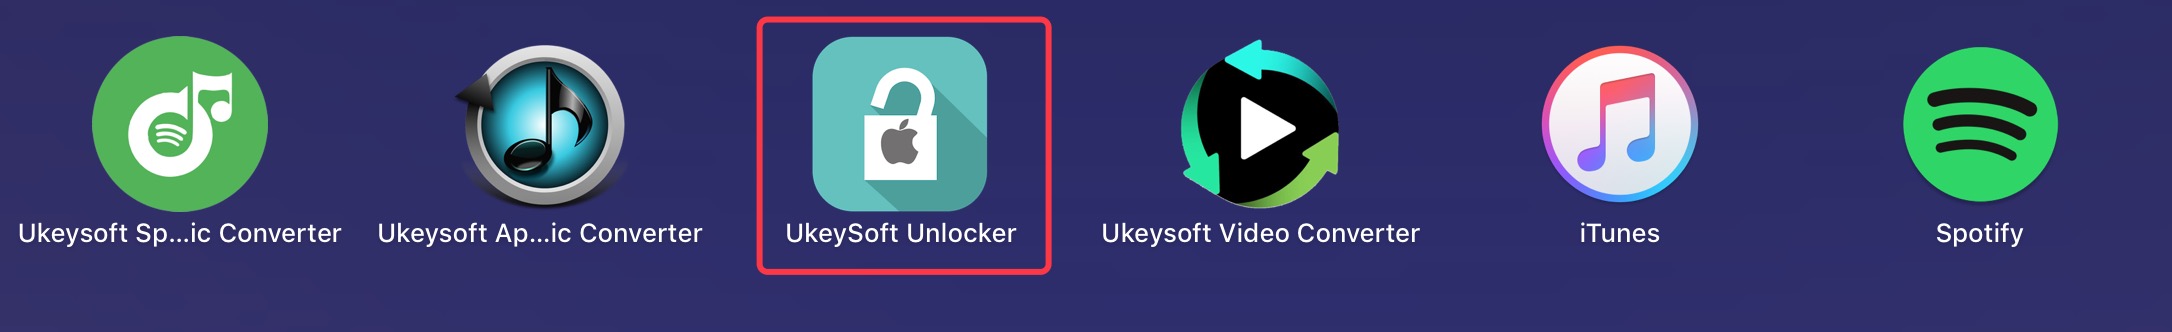 launch ukeysoft unlocker